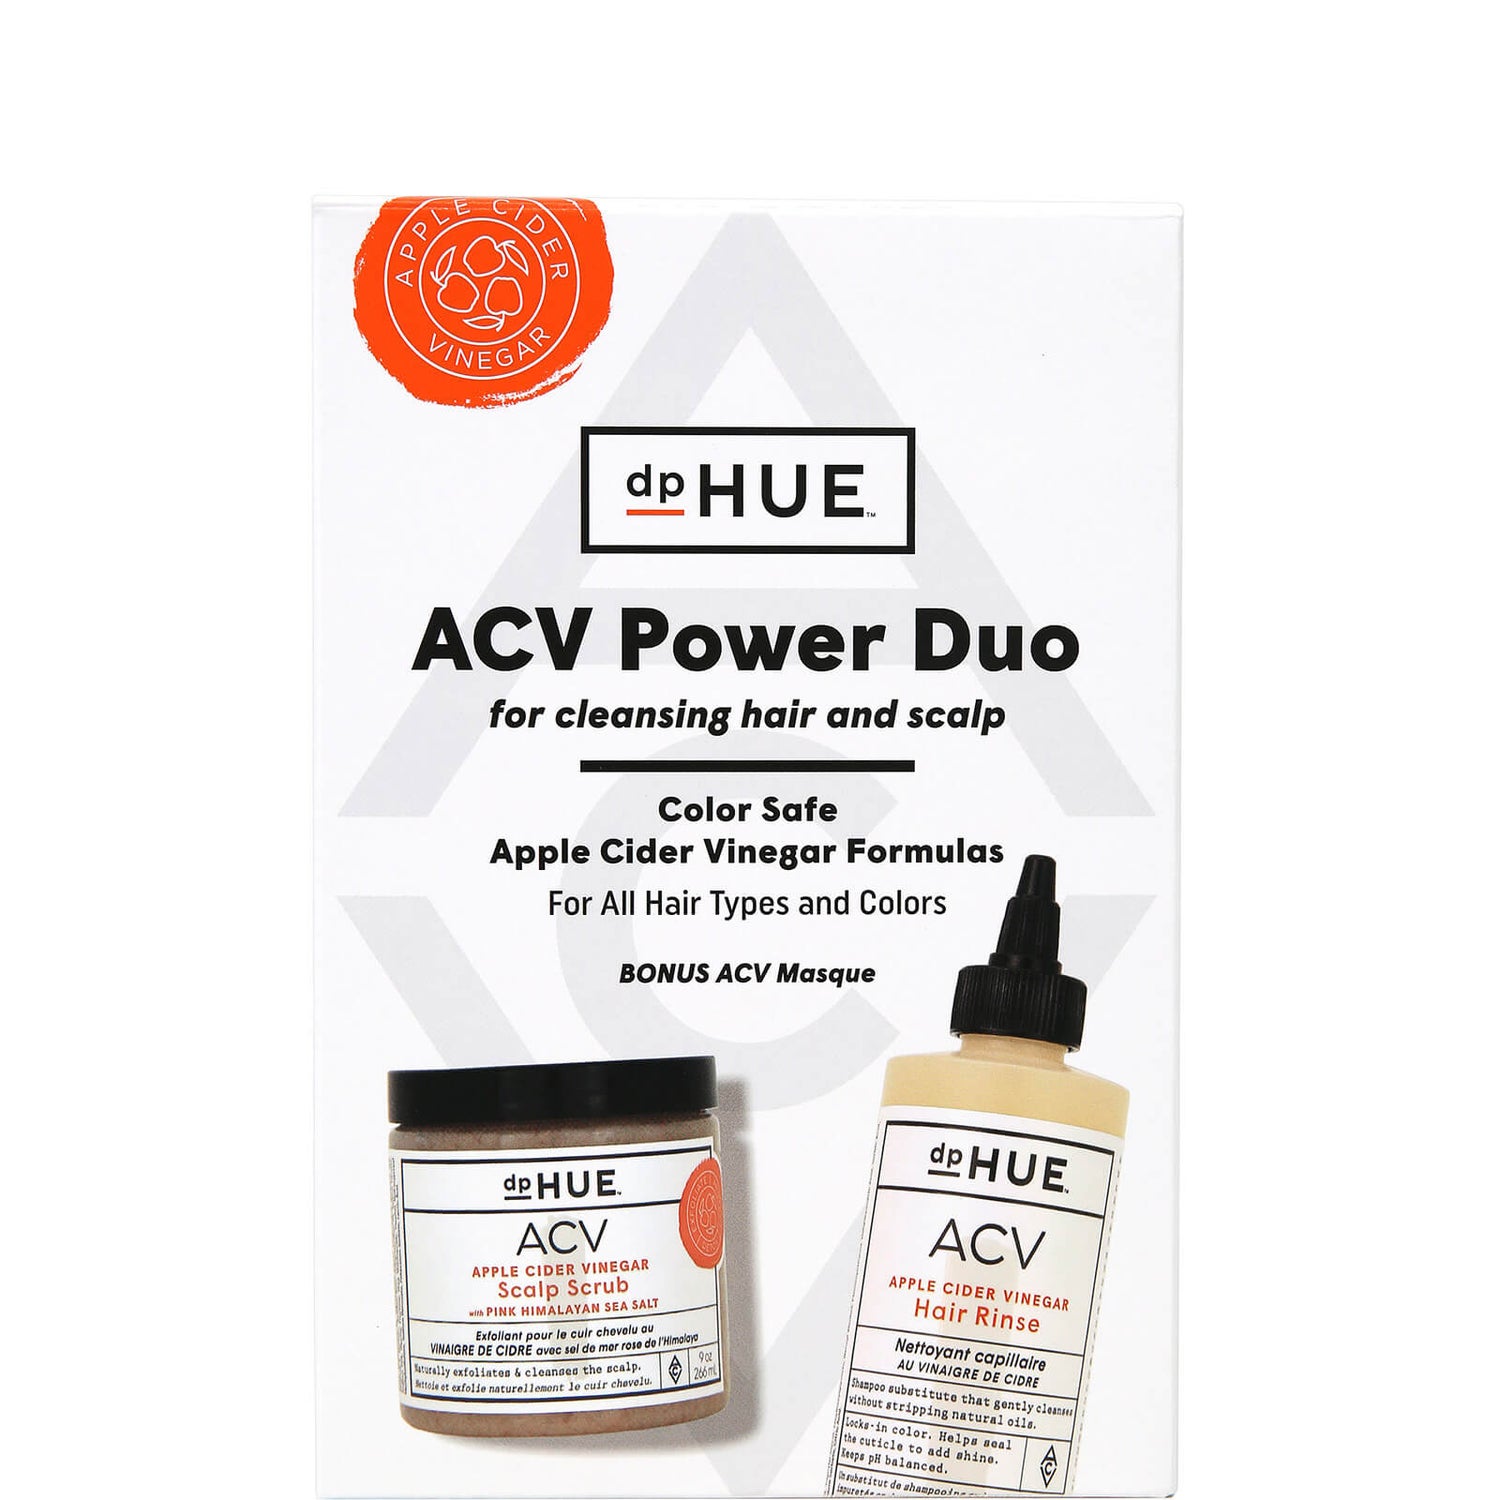 dpHUE ACV Power Duo